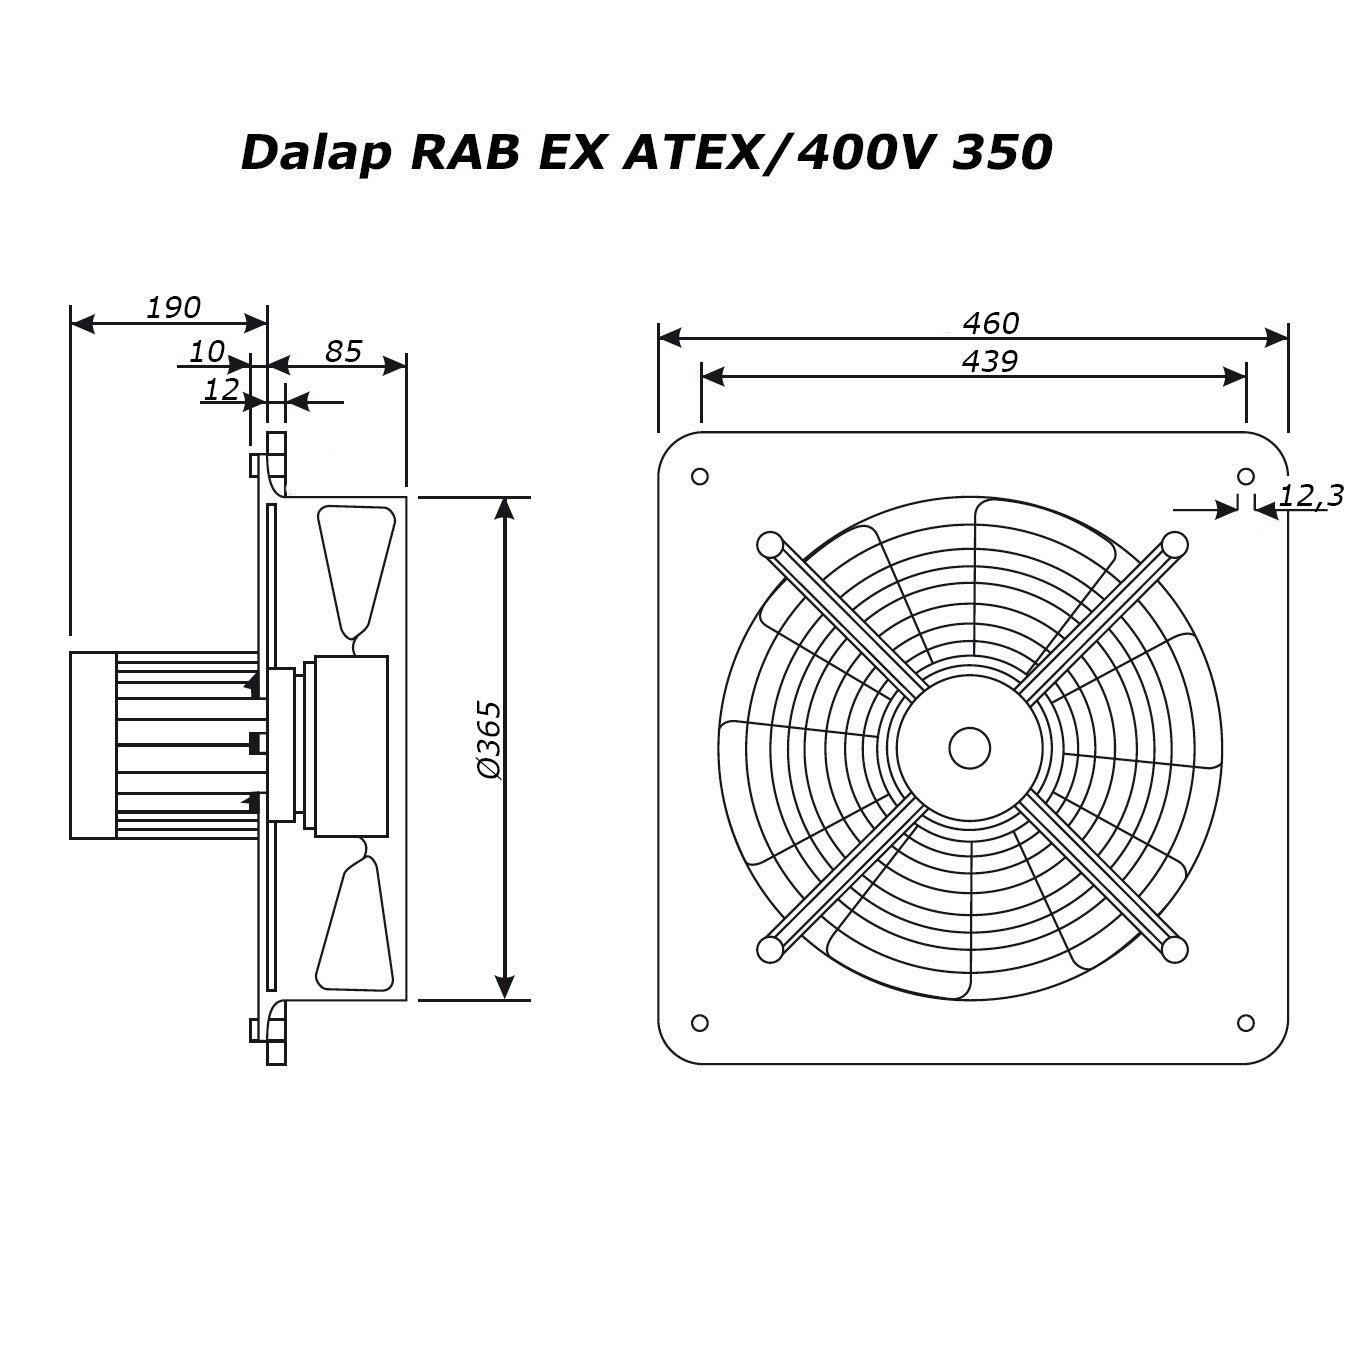 Hochdruckventilator für explosionsgefährdete Umgebungen O.ERRE EB 35 4T bei 230V/400V EX ATEX, Ø 365 mm